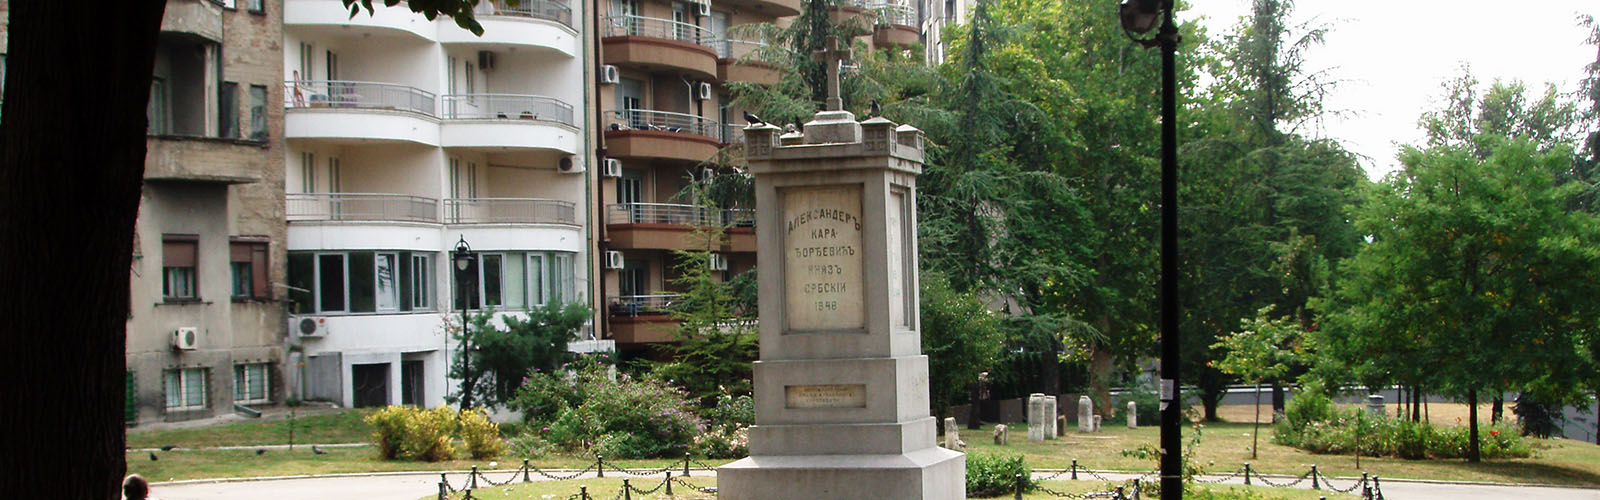 Concierge Belgrade | Spomenik oslobodiocima Beograda 1806